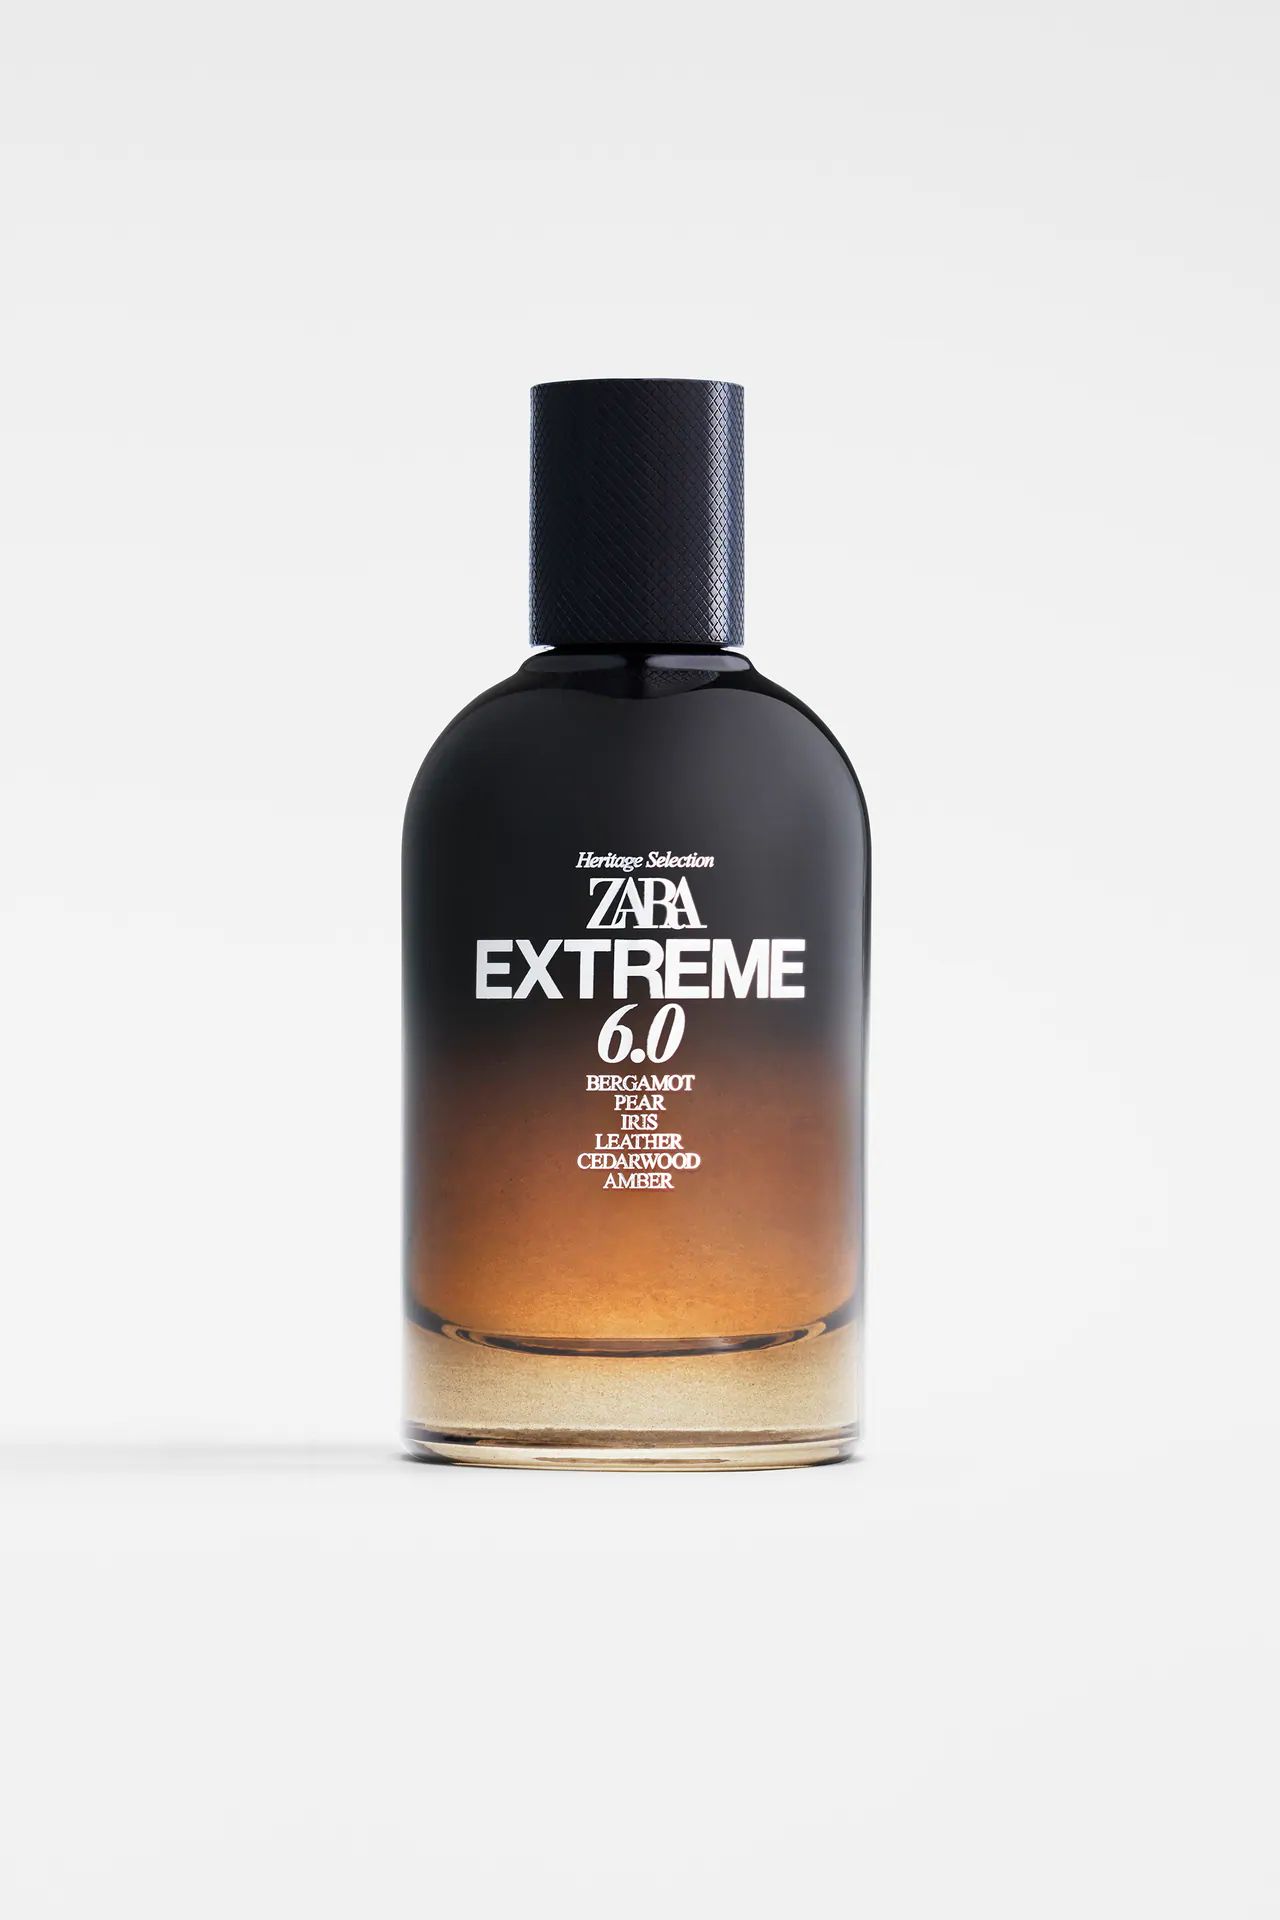 Extreme 6.0 Zara cologne - a fragrance for men 2020